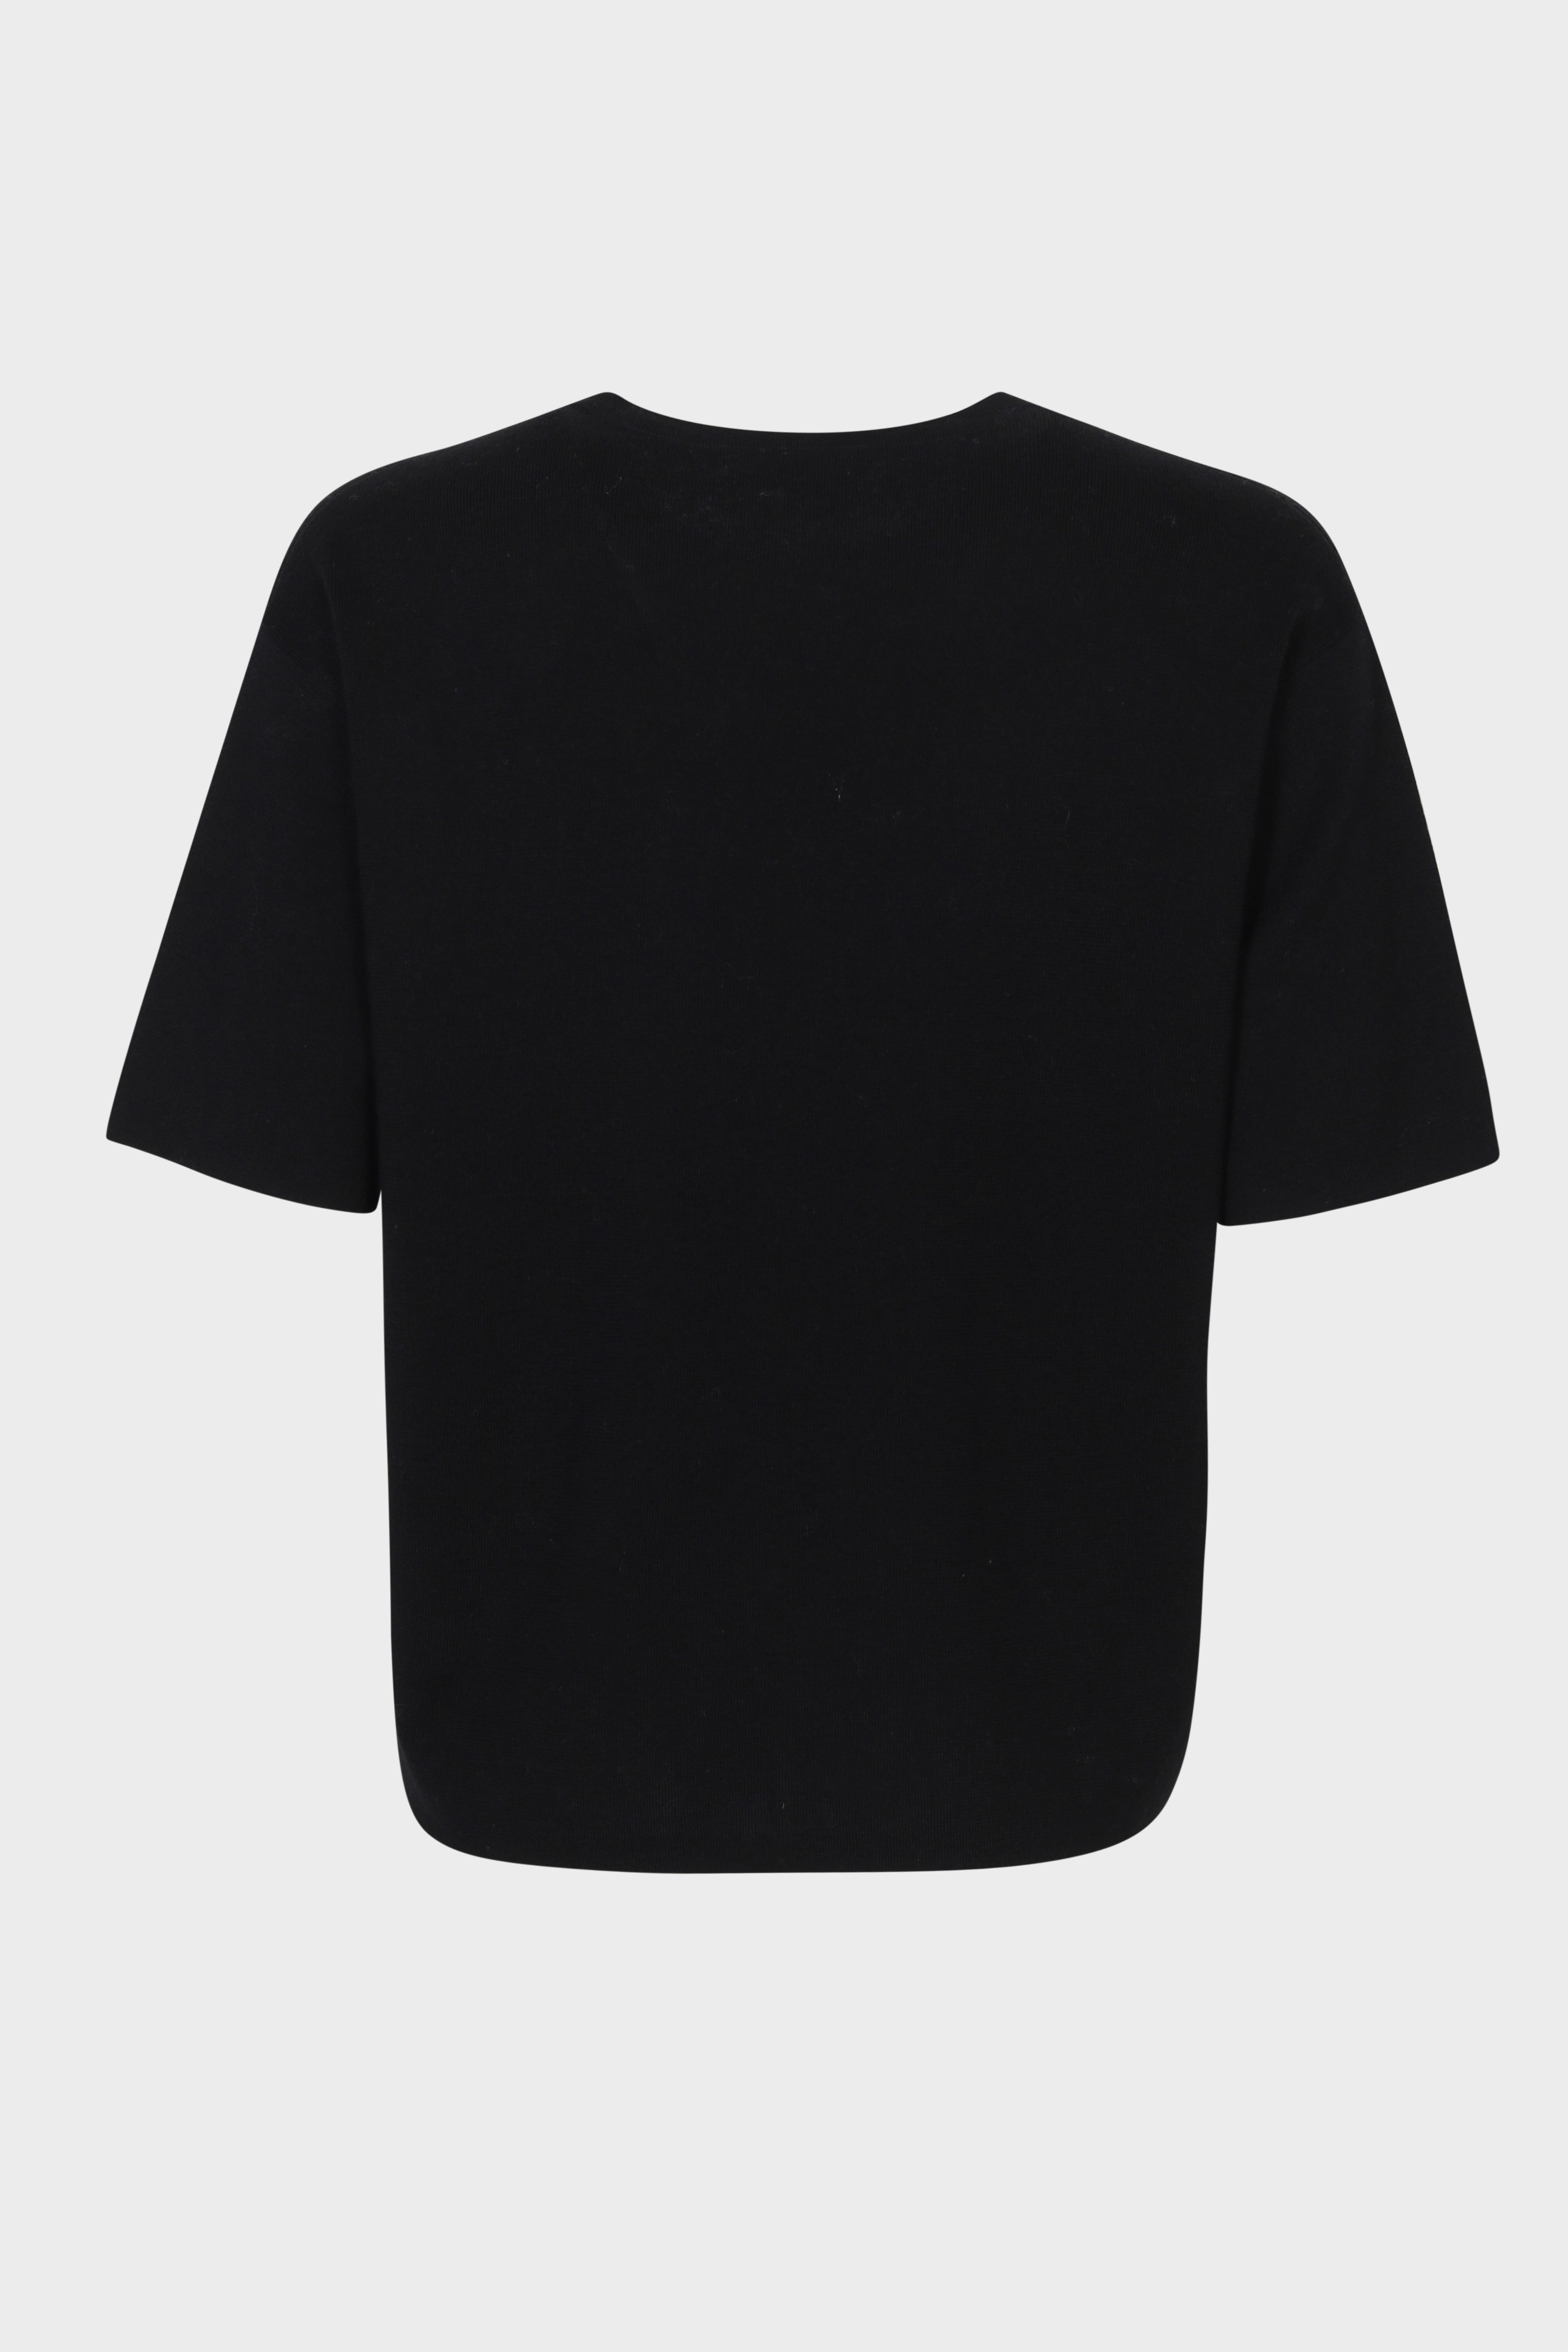 SMINFINITY Knit T-Shirt in Black M/L